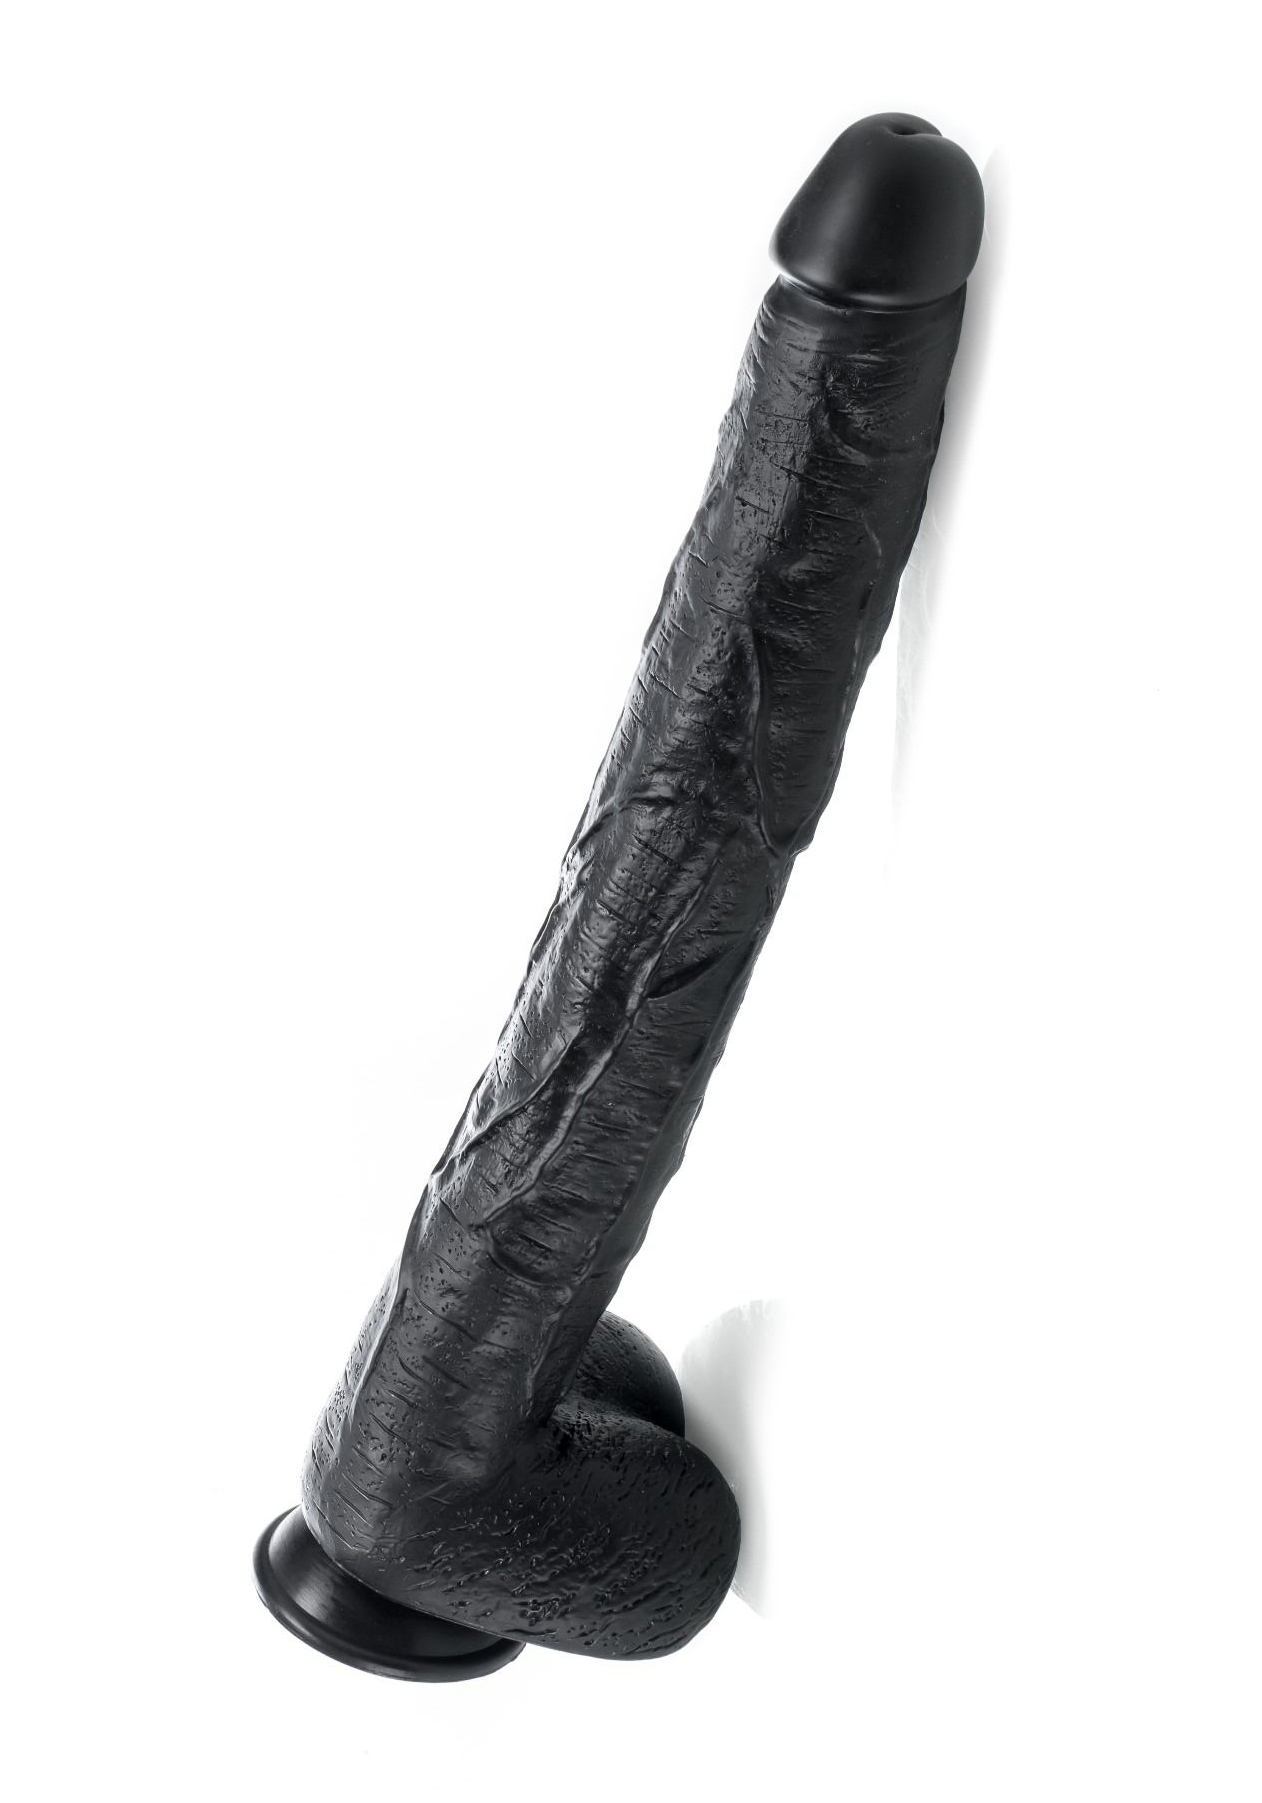 ZENN: Tom's Dick - Dildo black (43 x 5,8 cm)